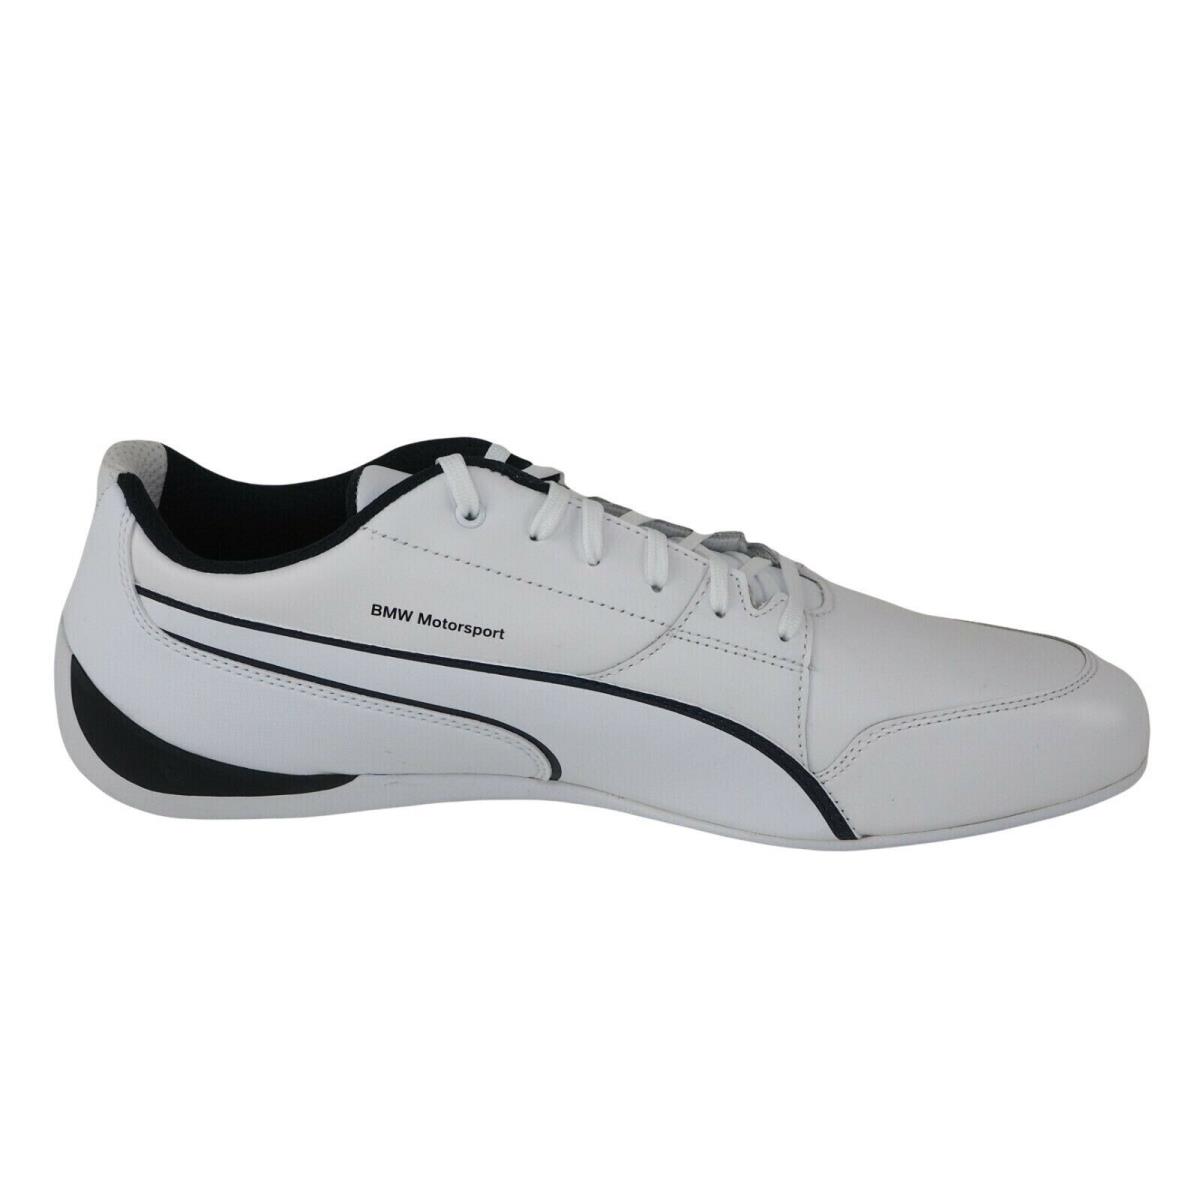 Puma Bmw MS Drift Cat 7 Sneakers 305986 02 Men s Shoes White Size 13 | 190275693806 - Puma shoes - White SporTipTop